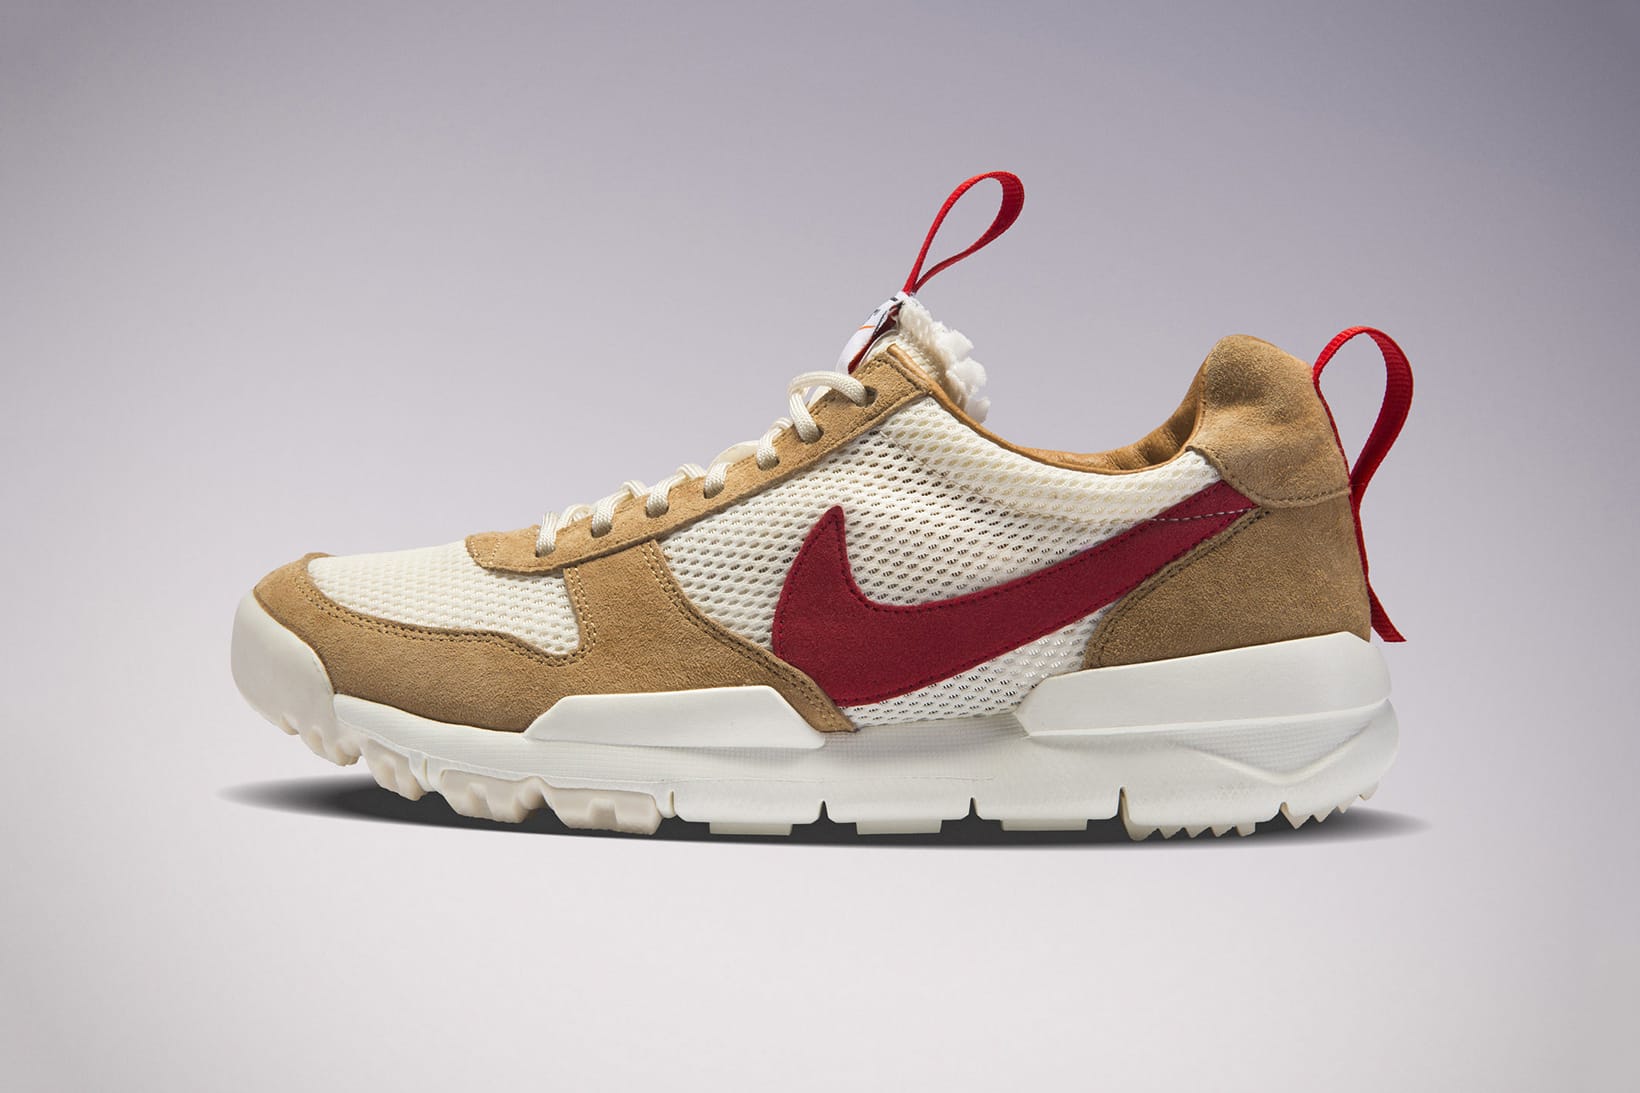 Tom Sachs x Nike Mars Yard 2.0 | HYPEBEAST